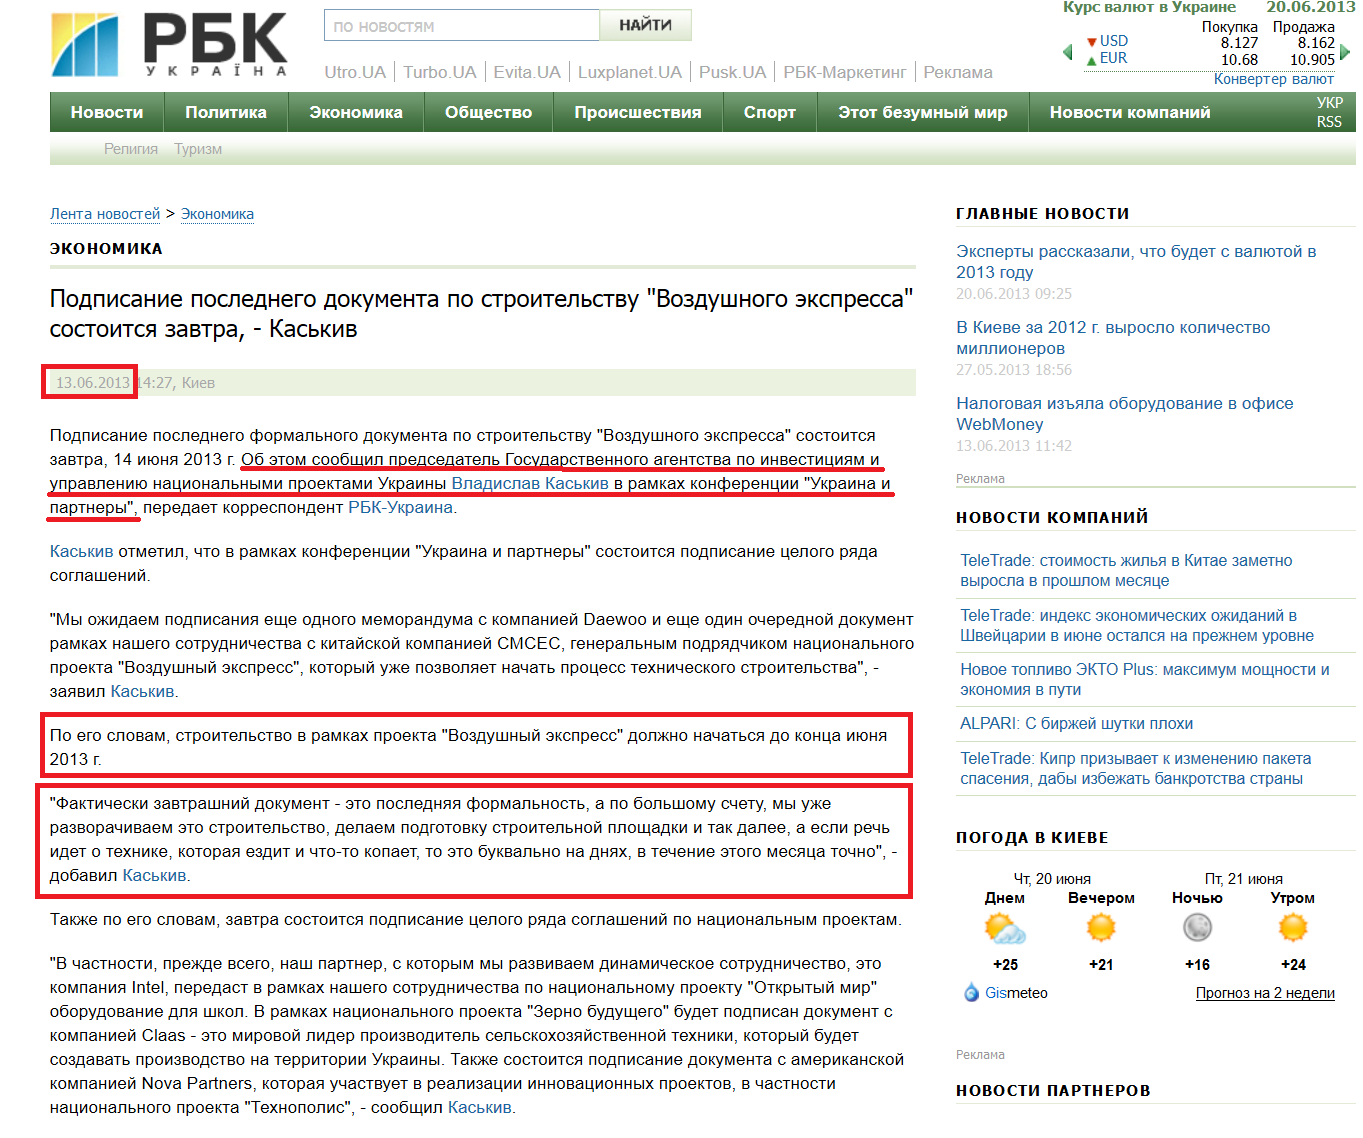 http://www.rbc.ua/rus/news/economic/podpisanie-poslednego-dokumenta-po-stroitelstvu-vozdushnogo-13062013142700